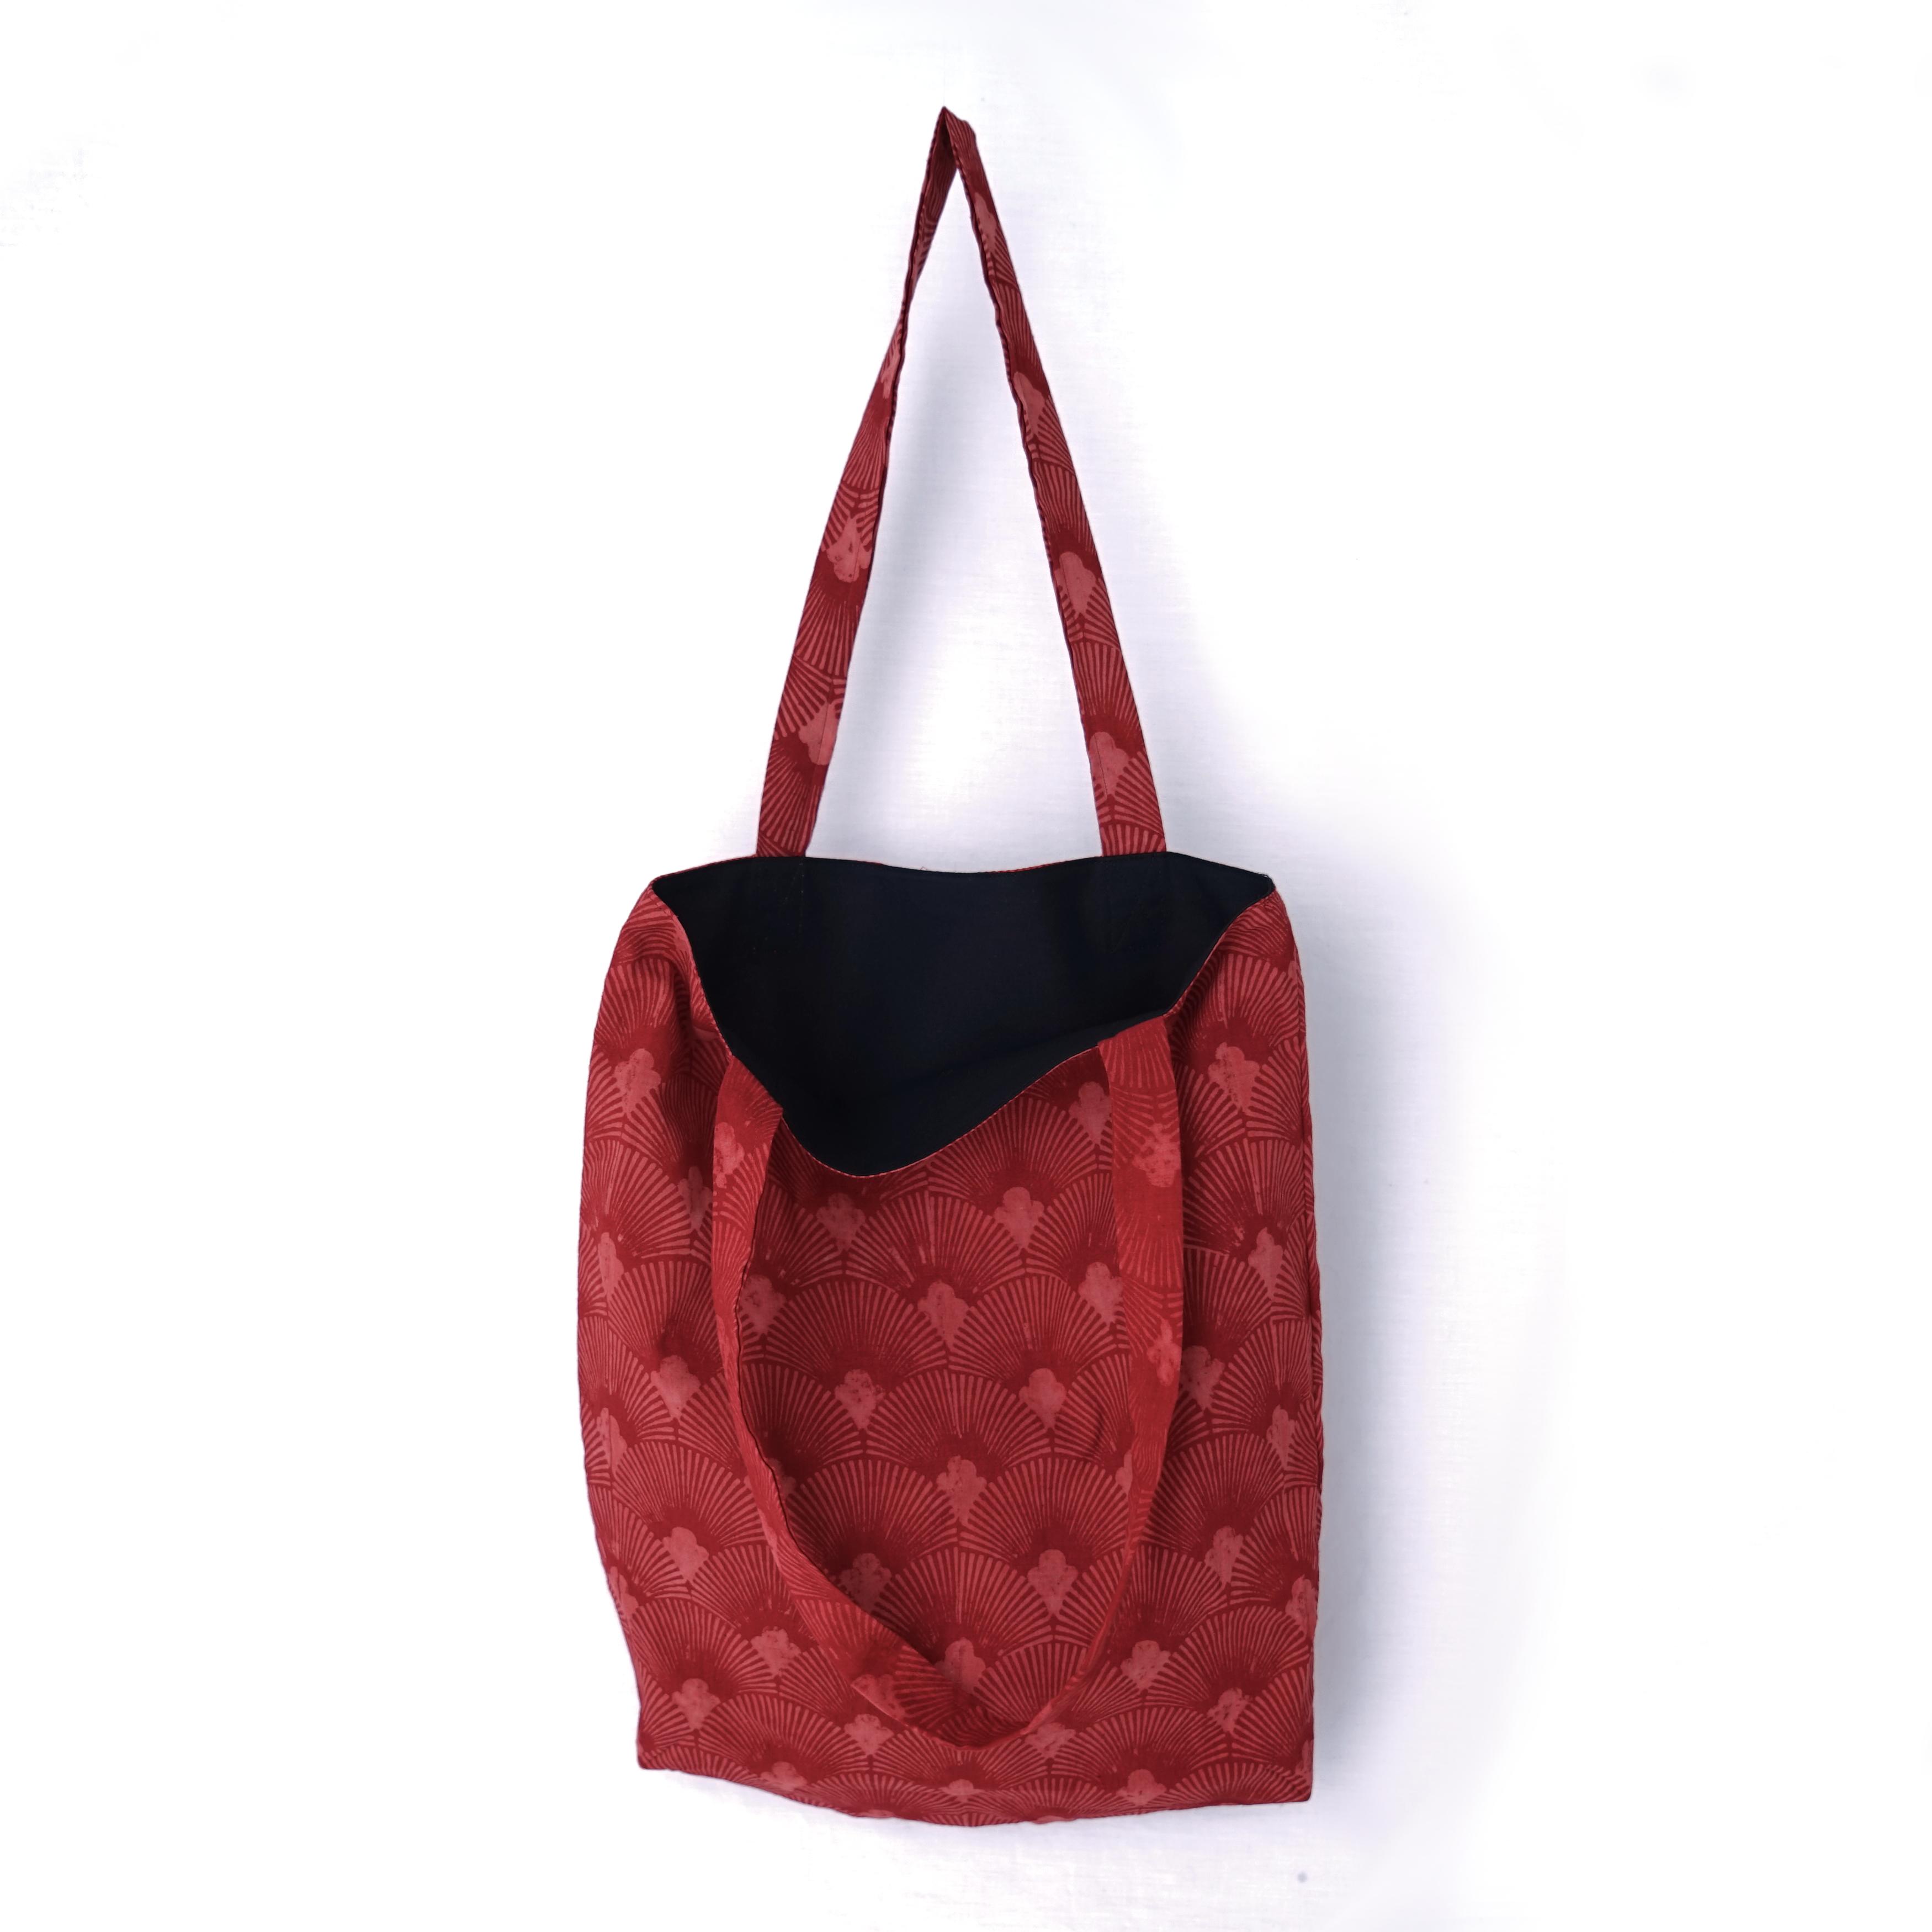 2 - TB021 - Block-Printed Tote Bag - Alizarin Red Dye - Shell Design - Open